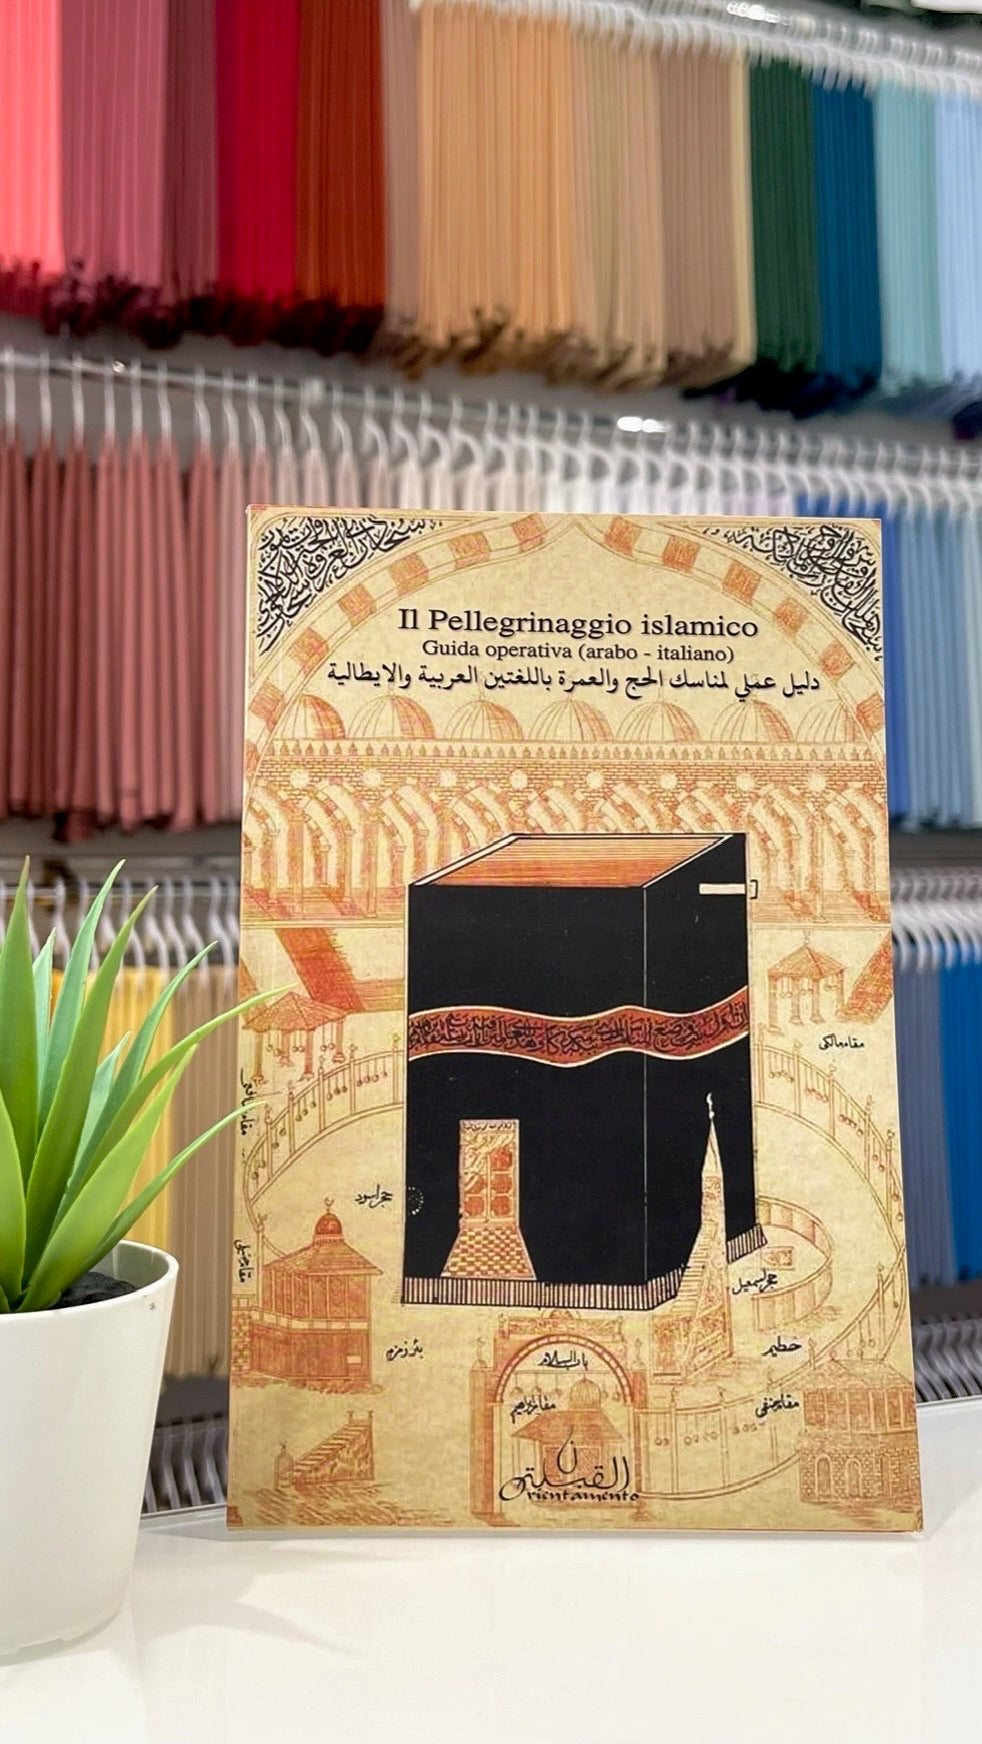 Il Pellegrinaggio islamico - Guida operativa (arabo - italiano) - Hijab Paradise 